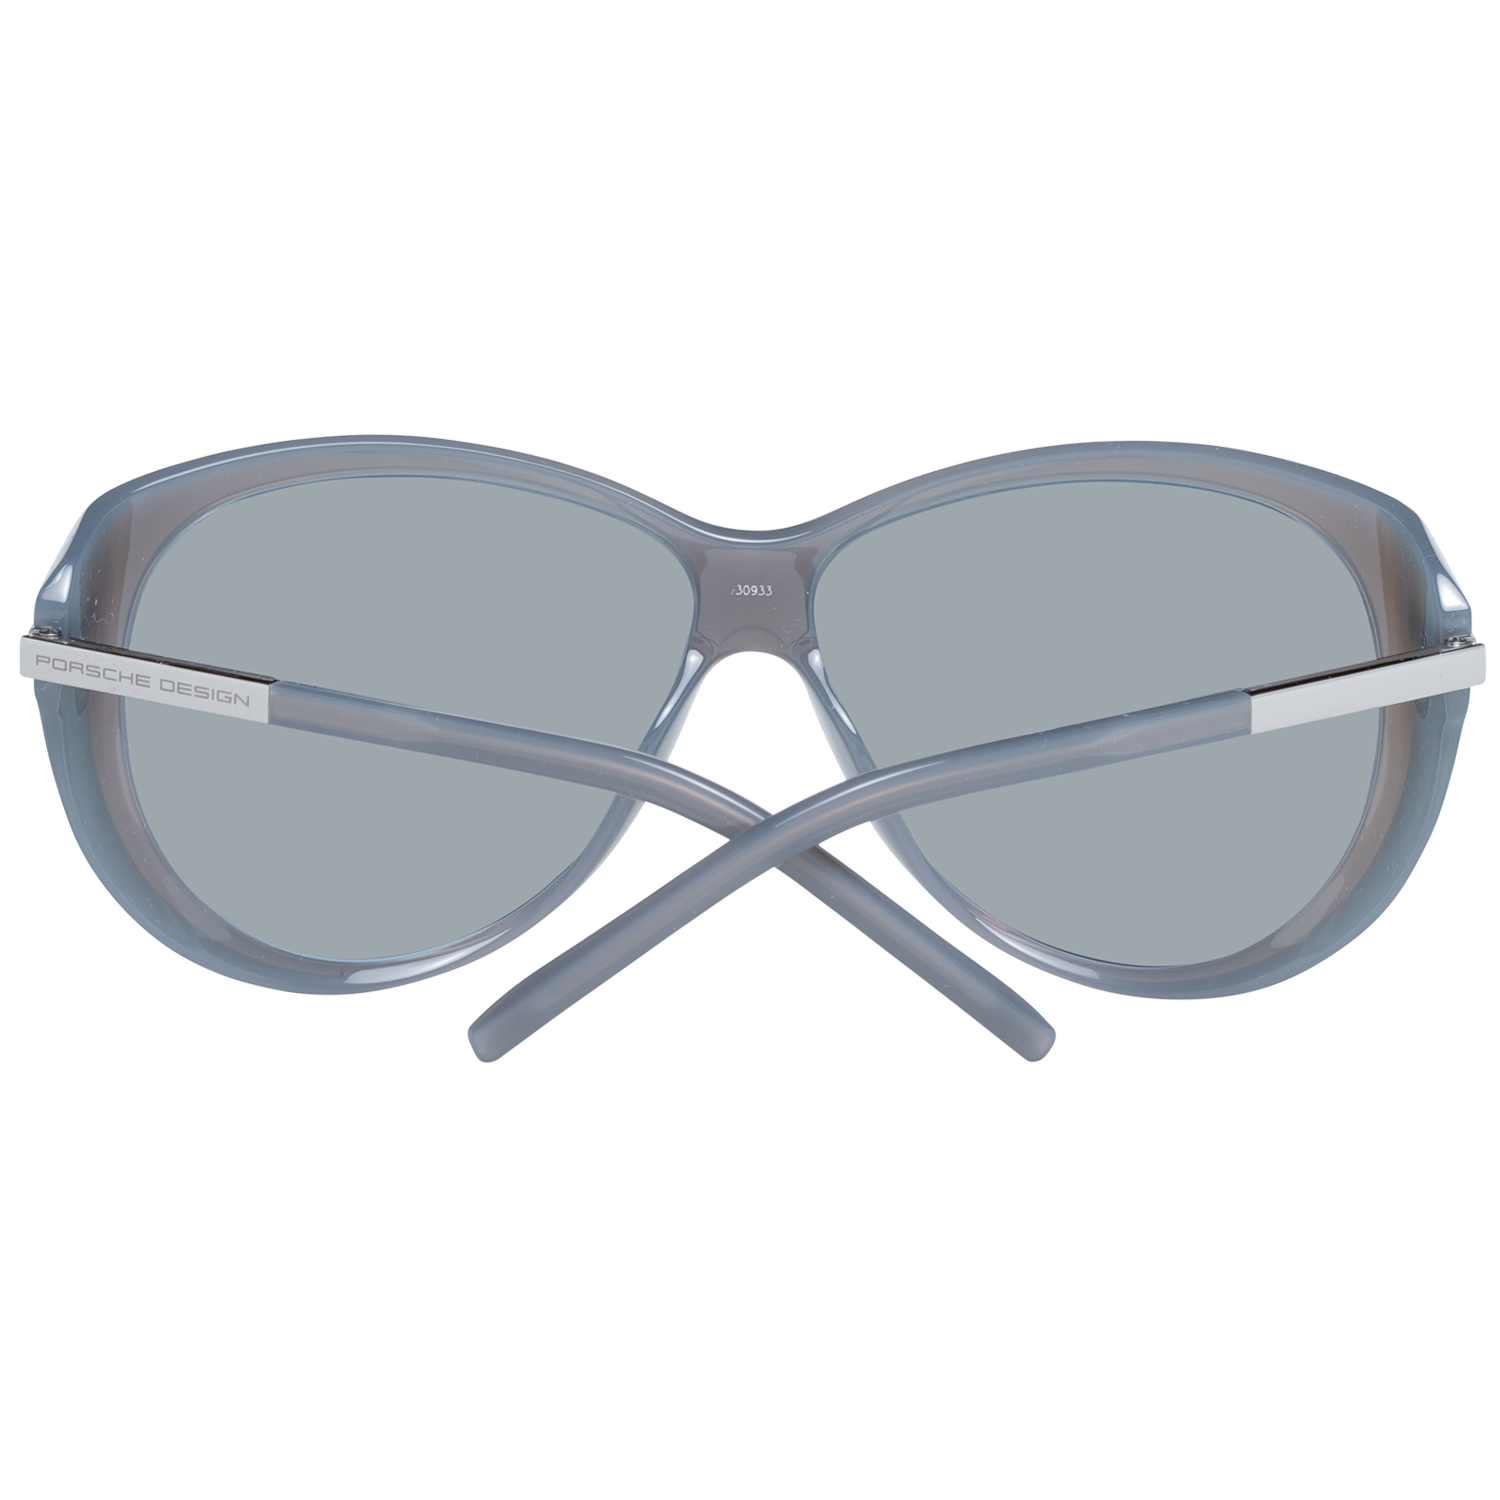 Porsche Design Sunglasses Porsche Design Sunglasses P8602 D 64mm Eyeglasses Eyewear UK USA Australia 